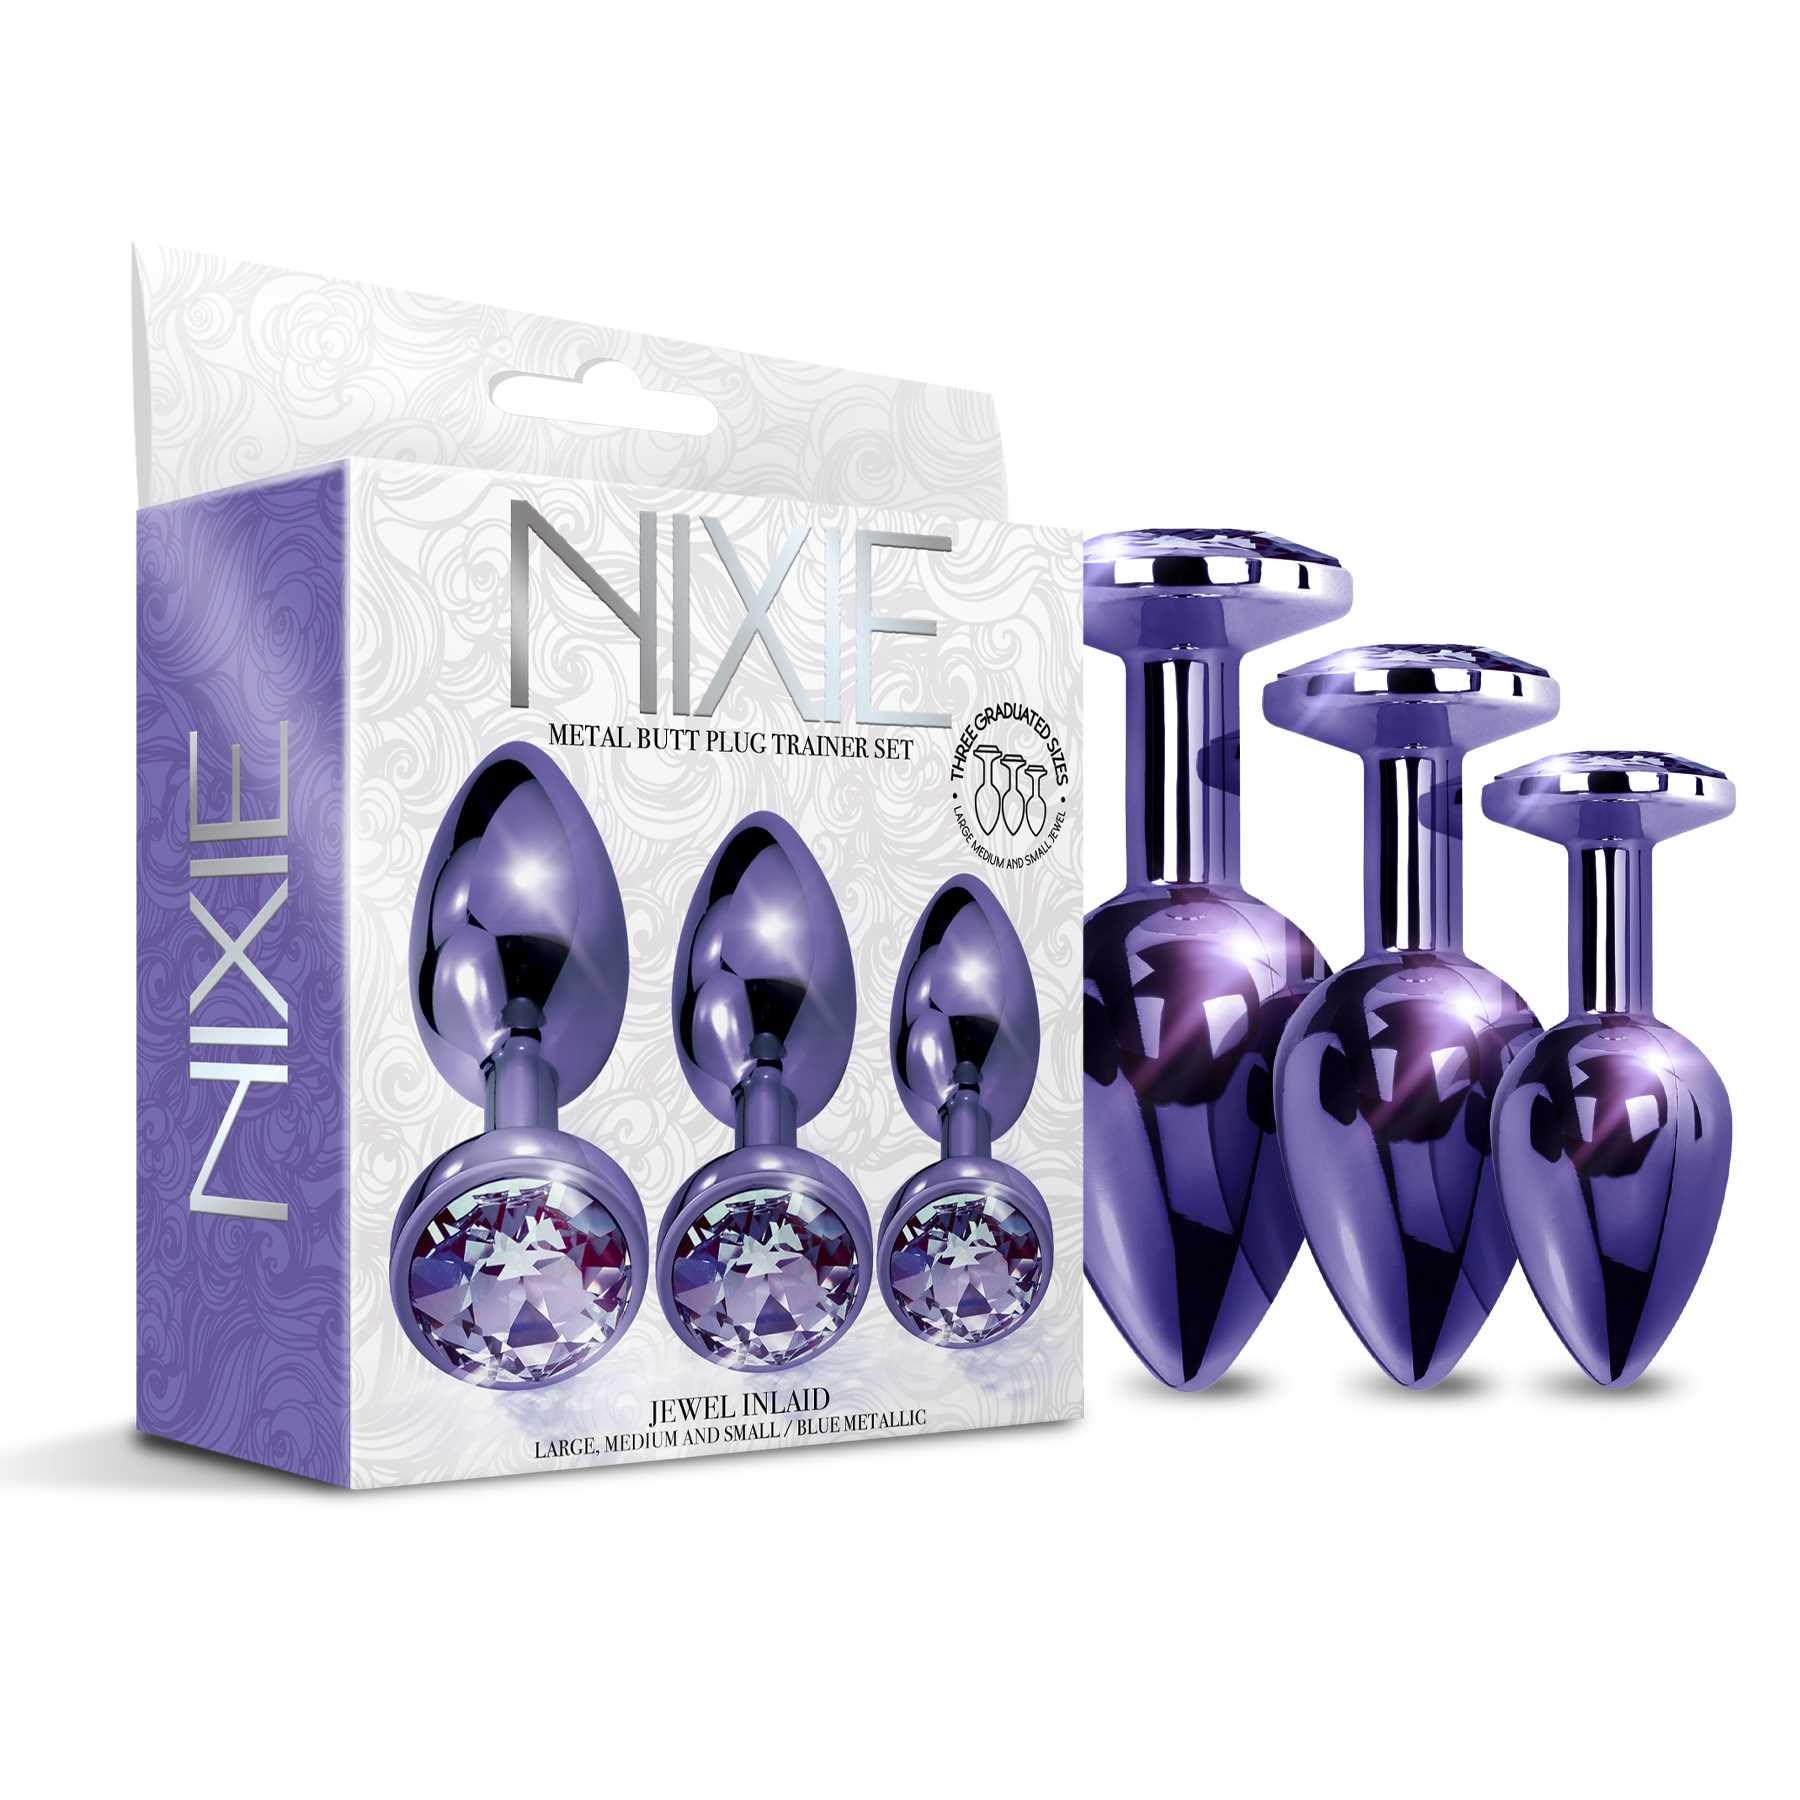 NIXIE Metal Butt Plug Trainer Set Metallic purple with box